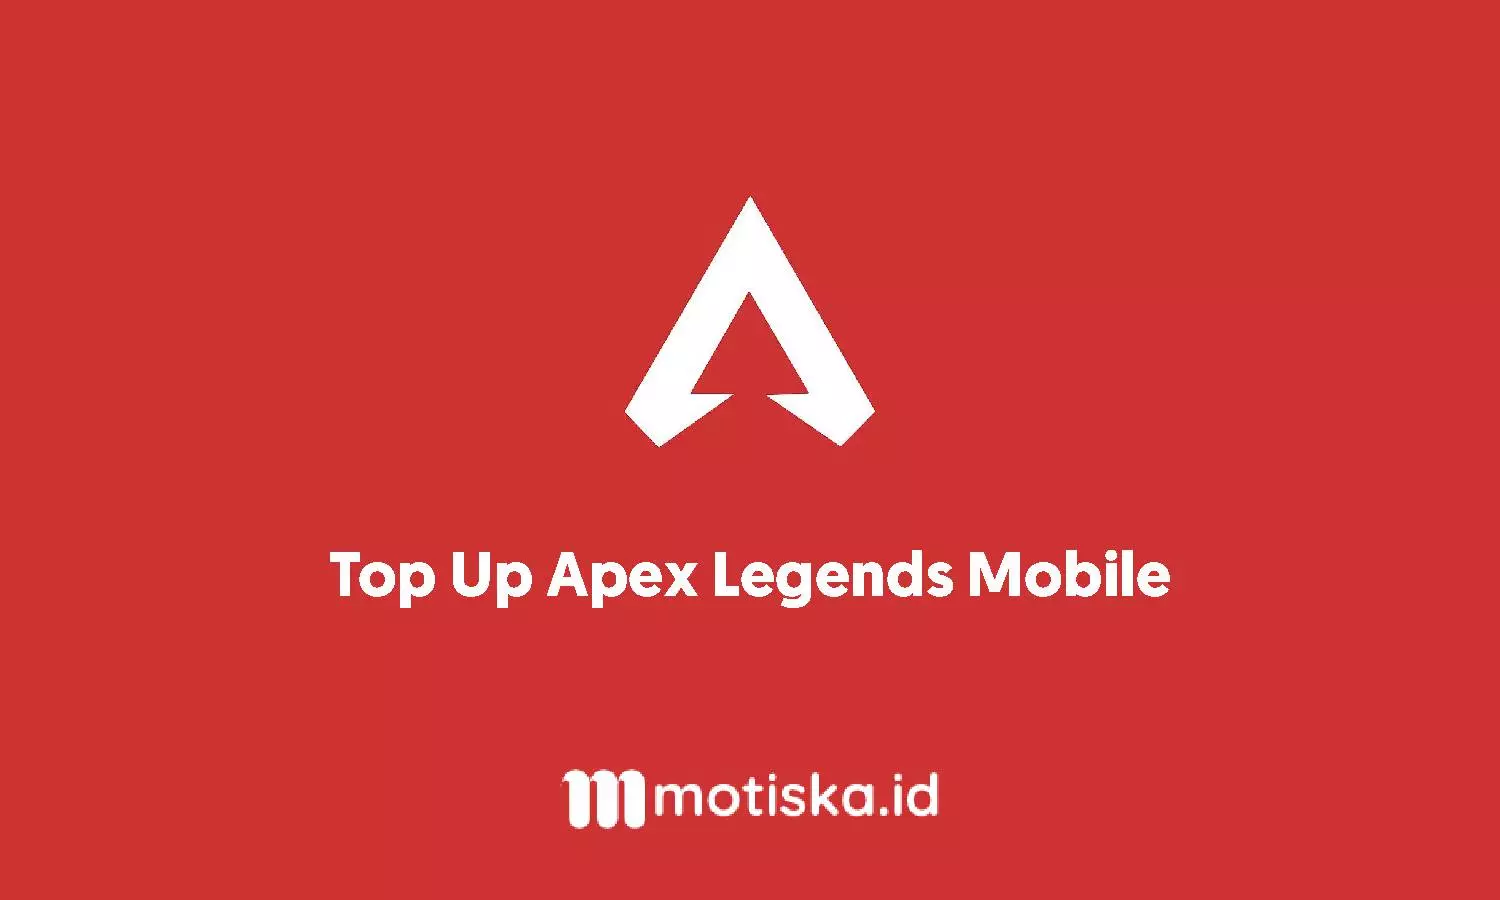 Apex legend top up